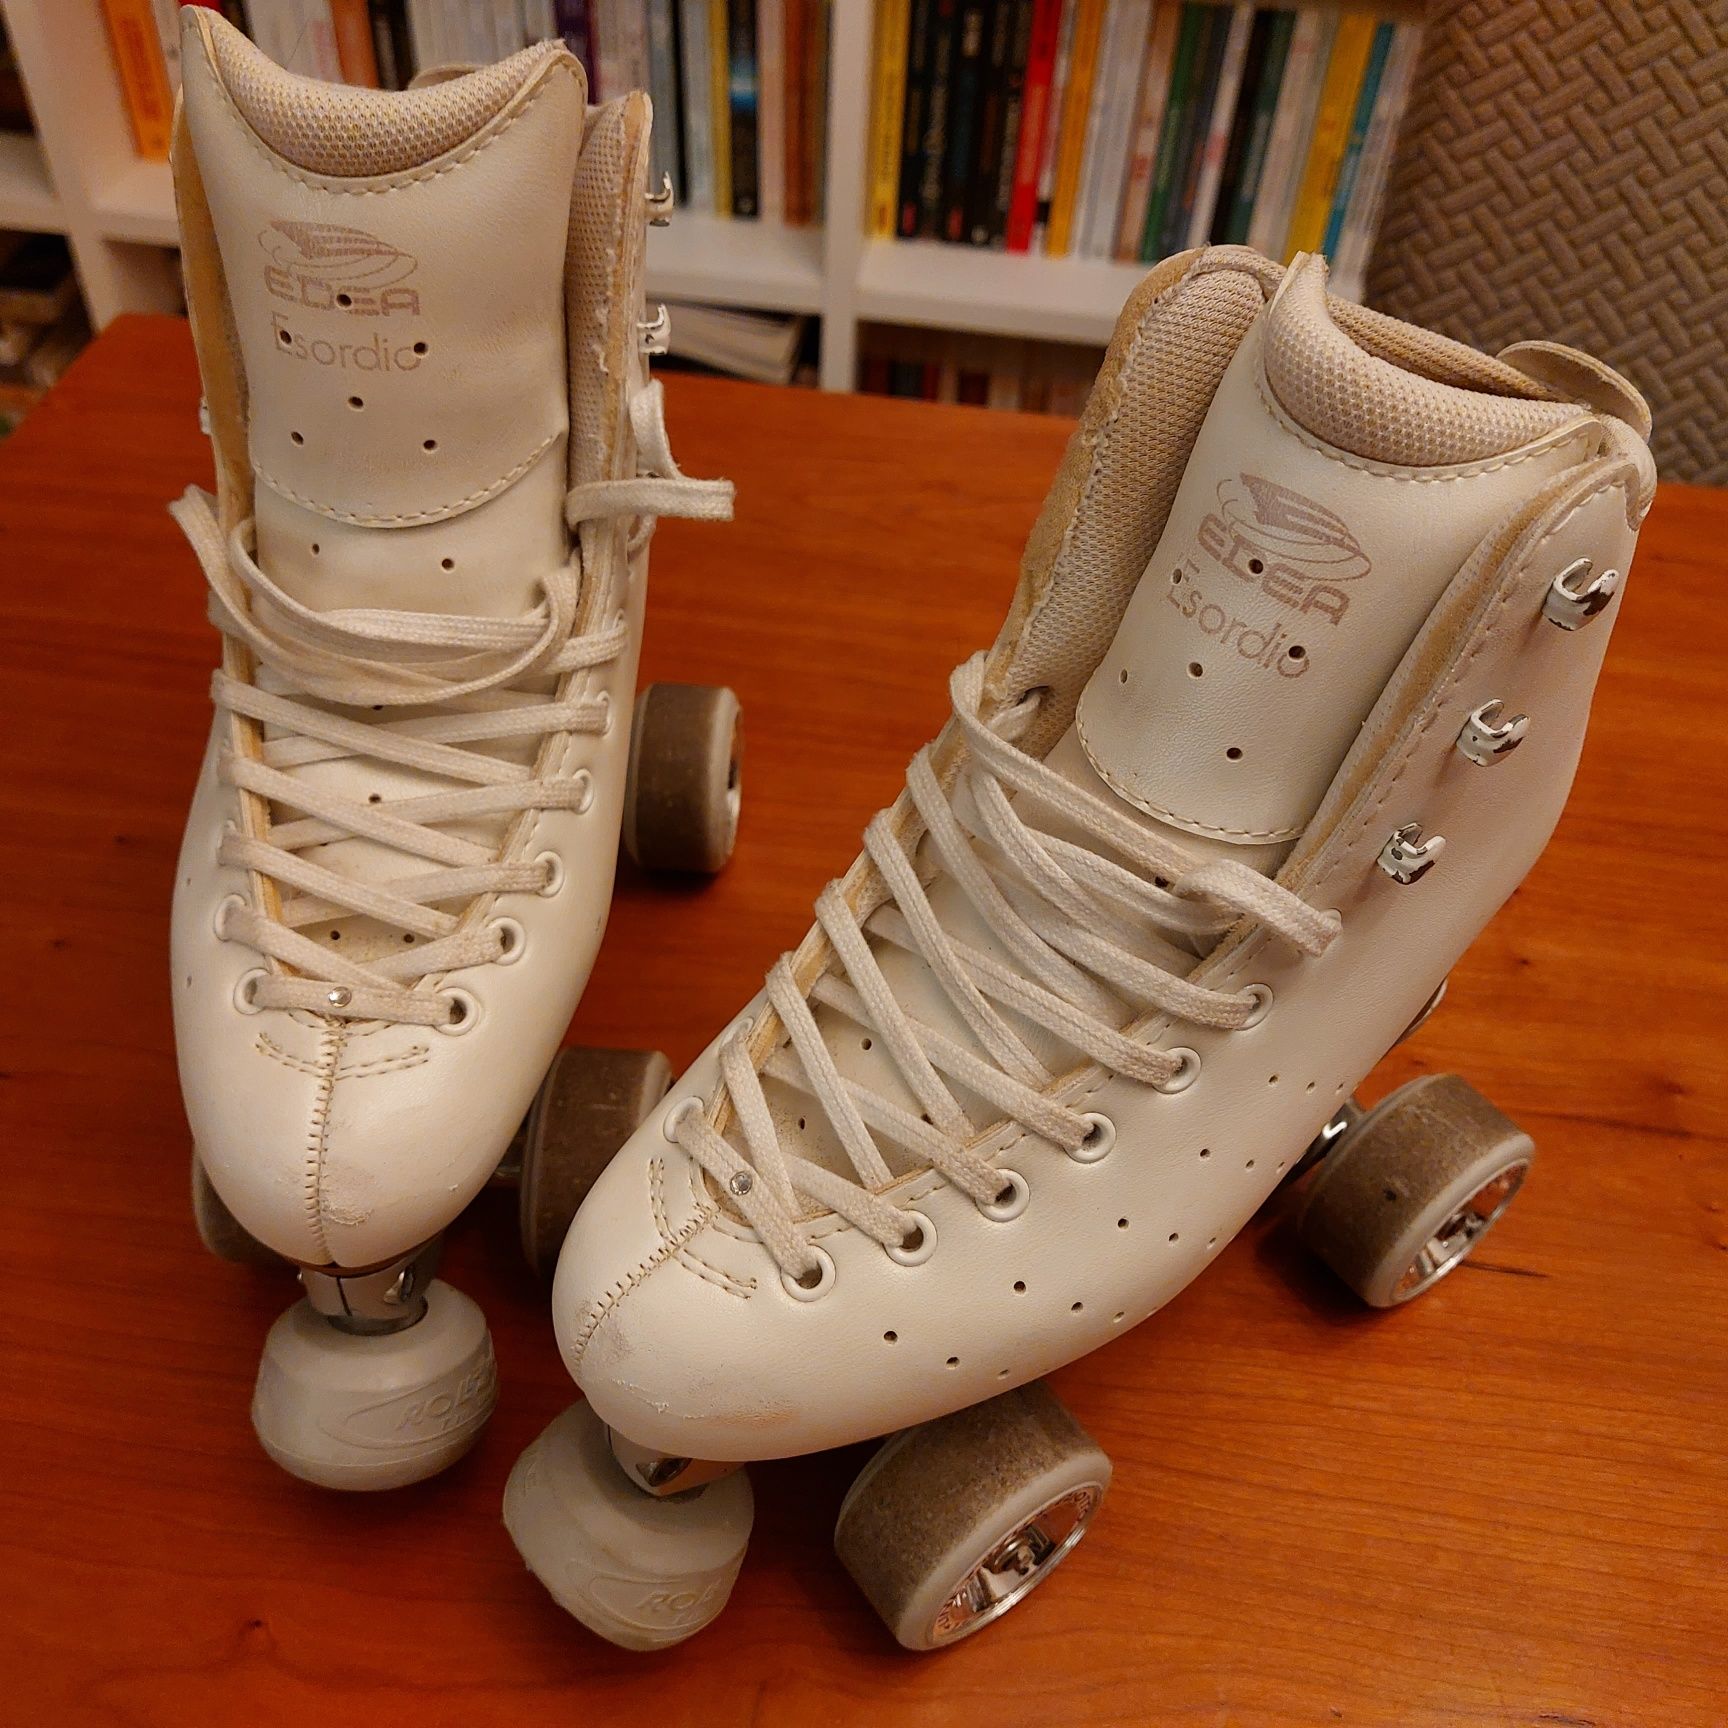 Patins de patinagem artística